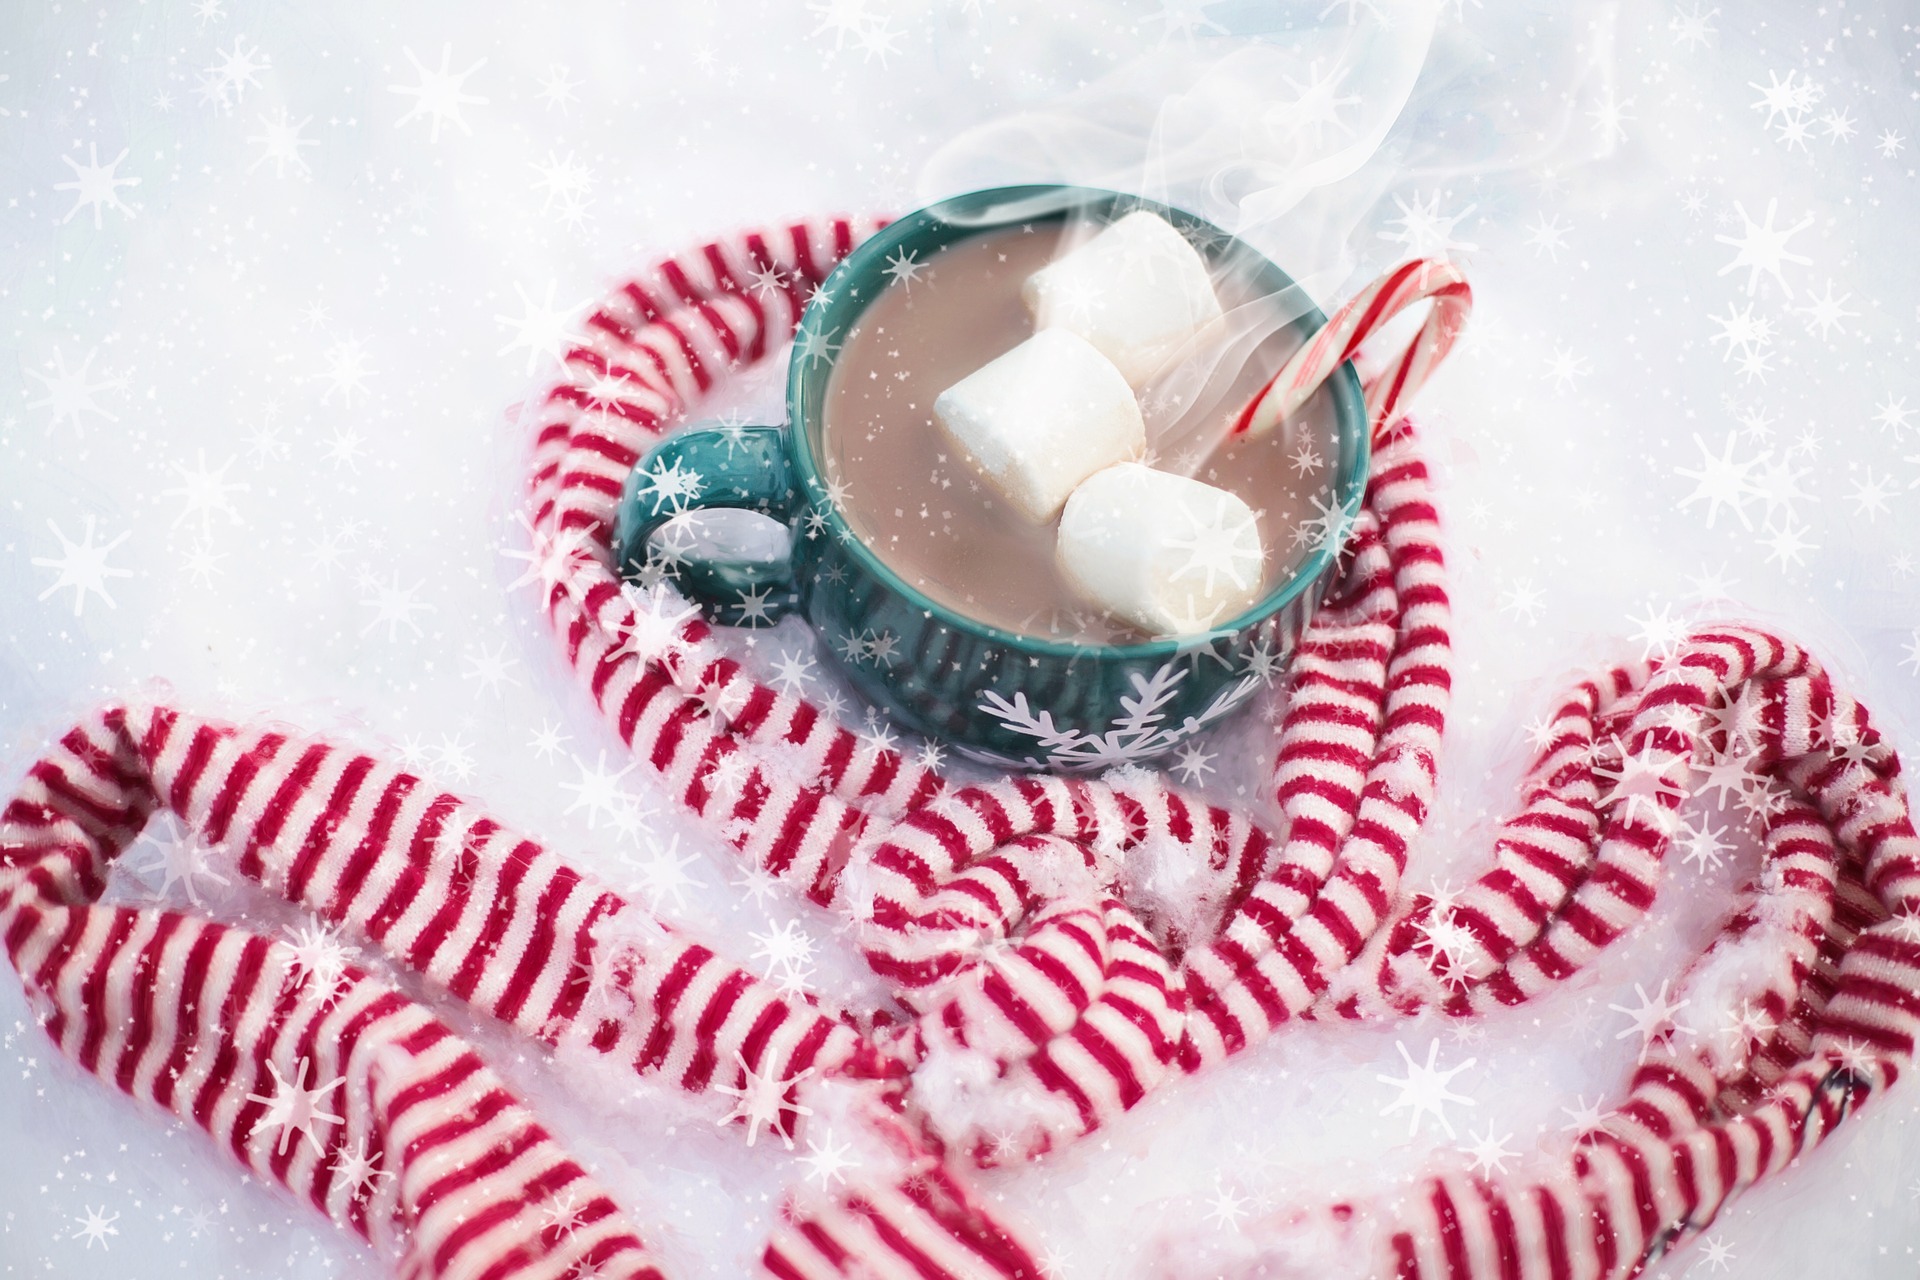 hot-chocolate-1068706_1920_pixabay.jpg